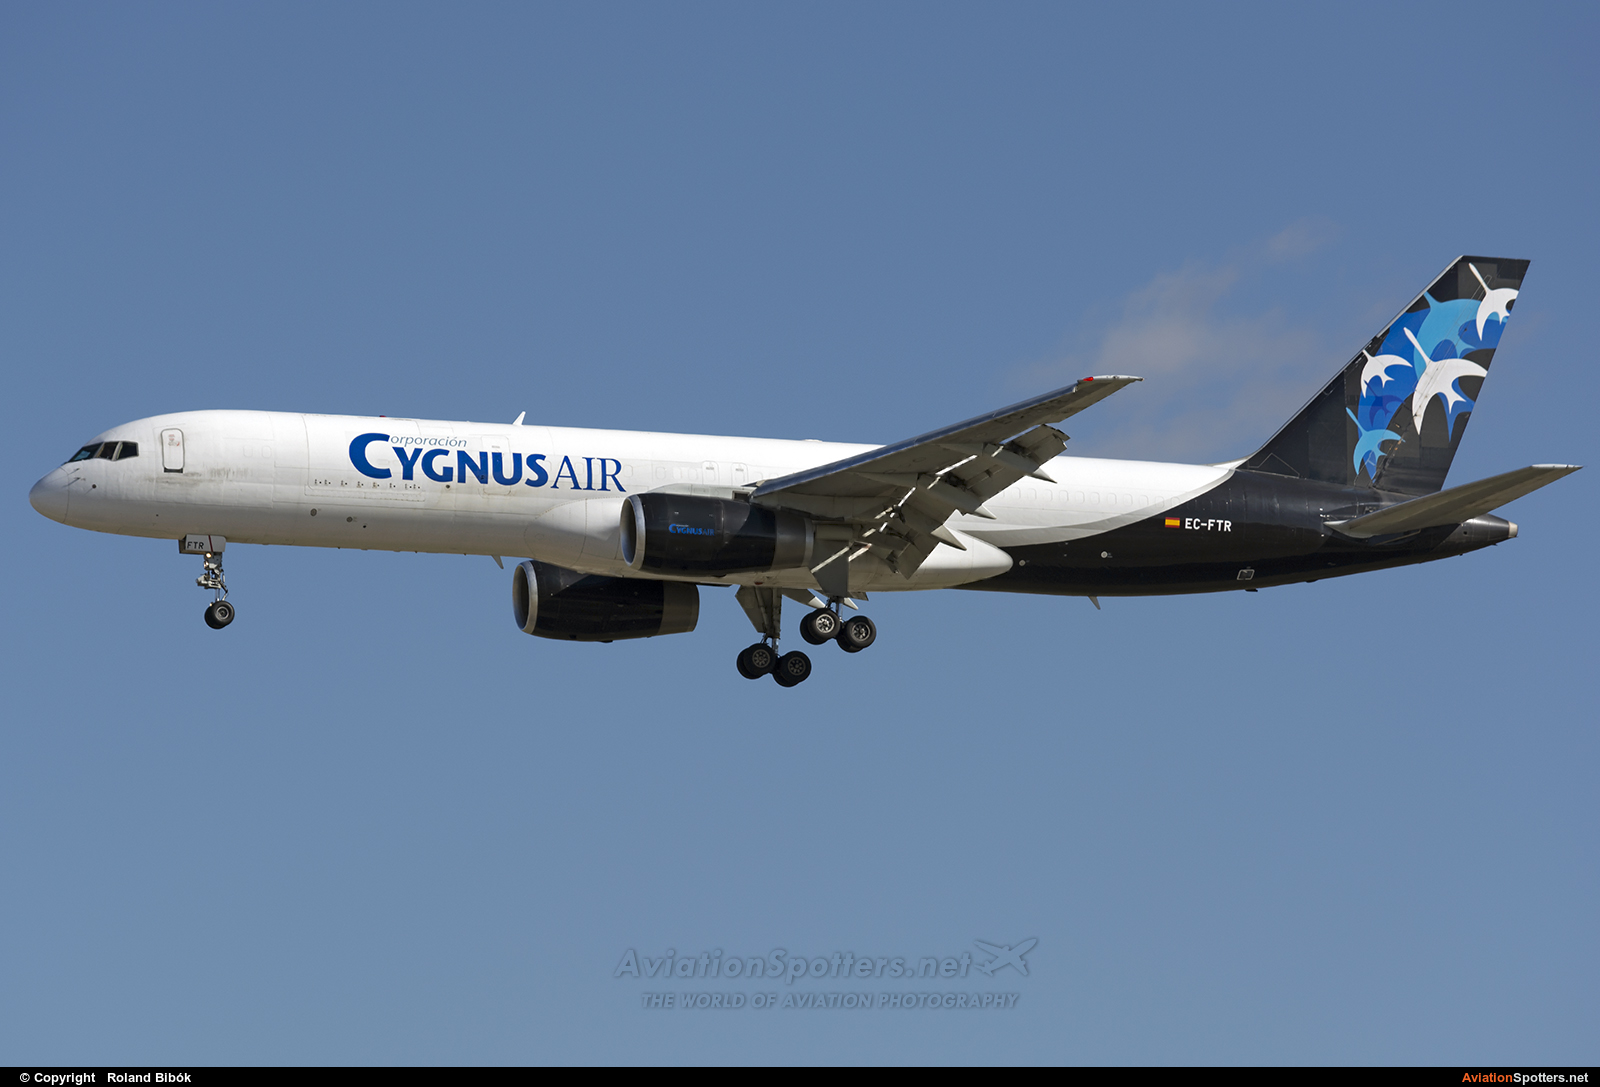 Cygnus Air  -  757-200F  (EC-FTR) By Roland Bibók (Roland Bibok)